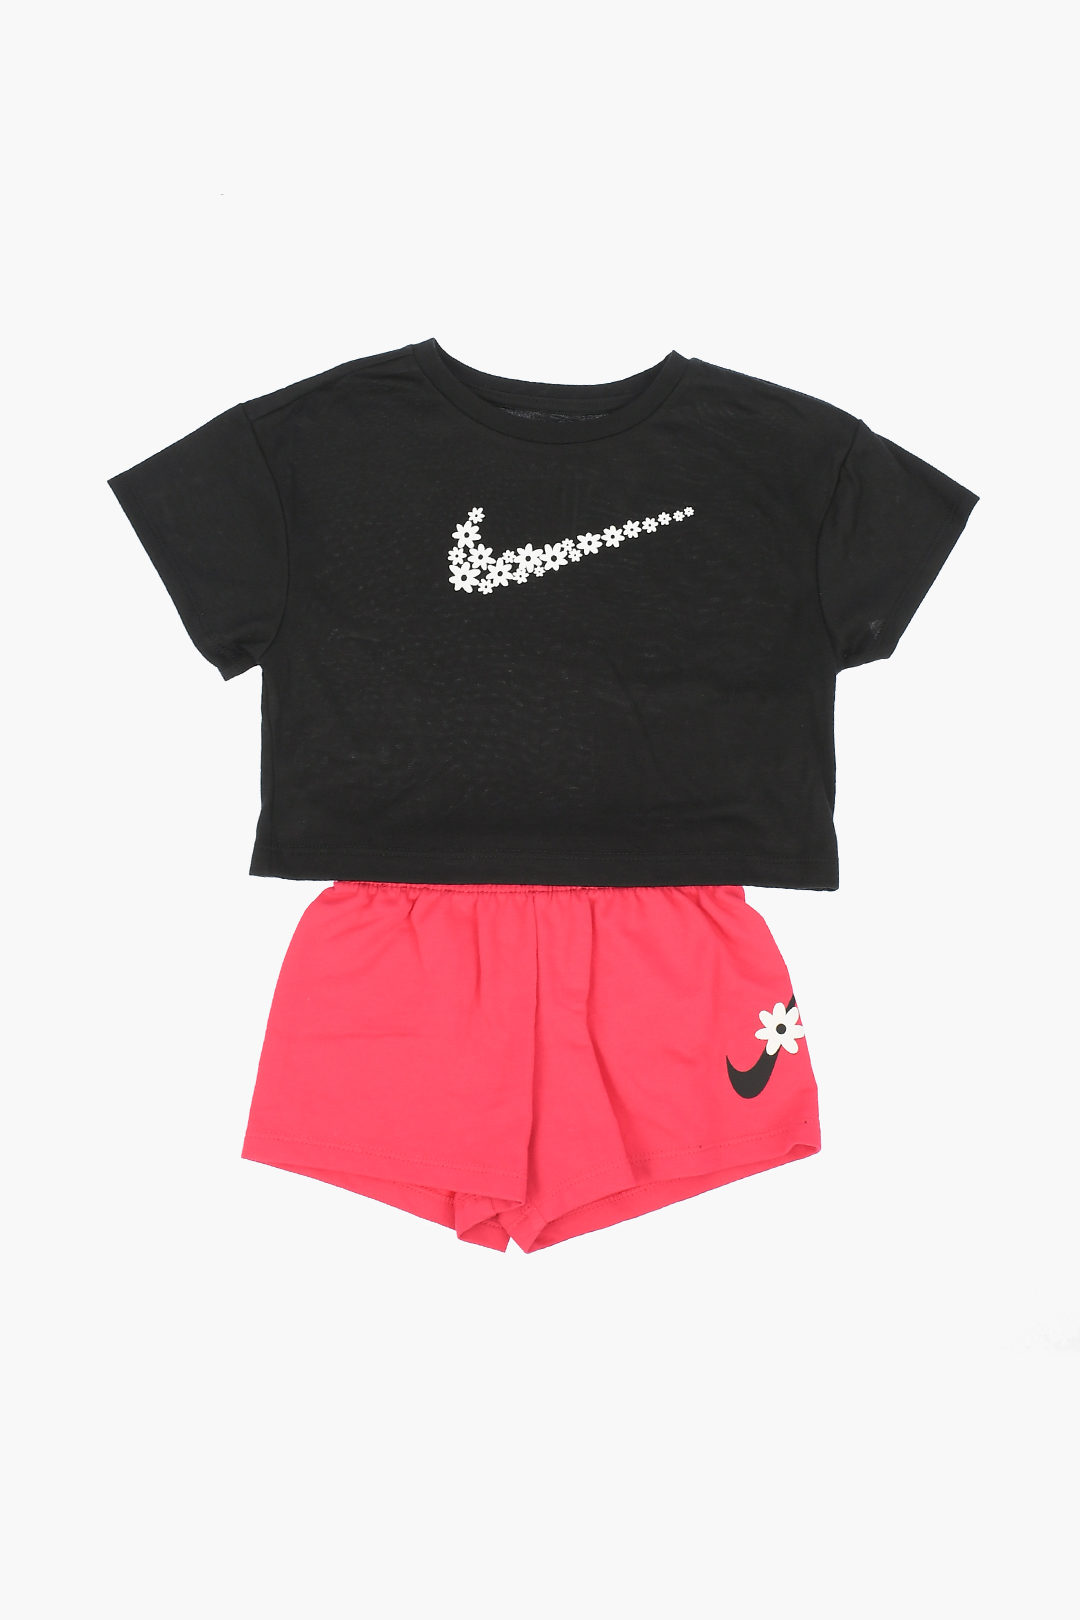 Nike KIDS t-shirt and shorts SPORT DAISY set girls - Glamood Outlet